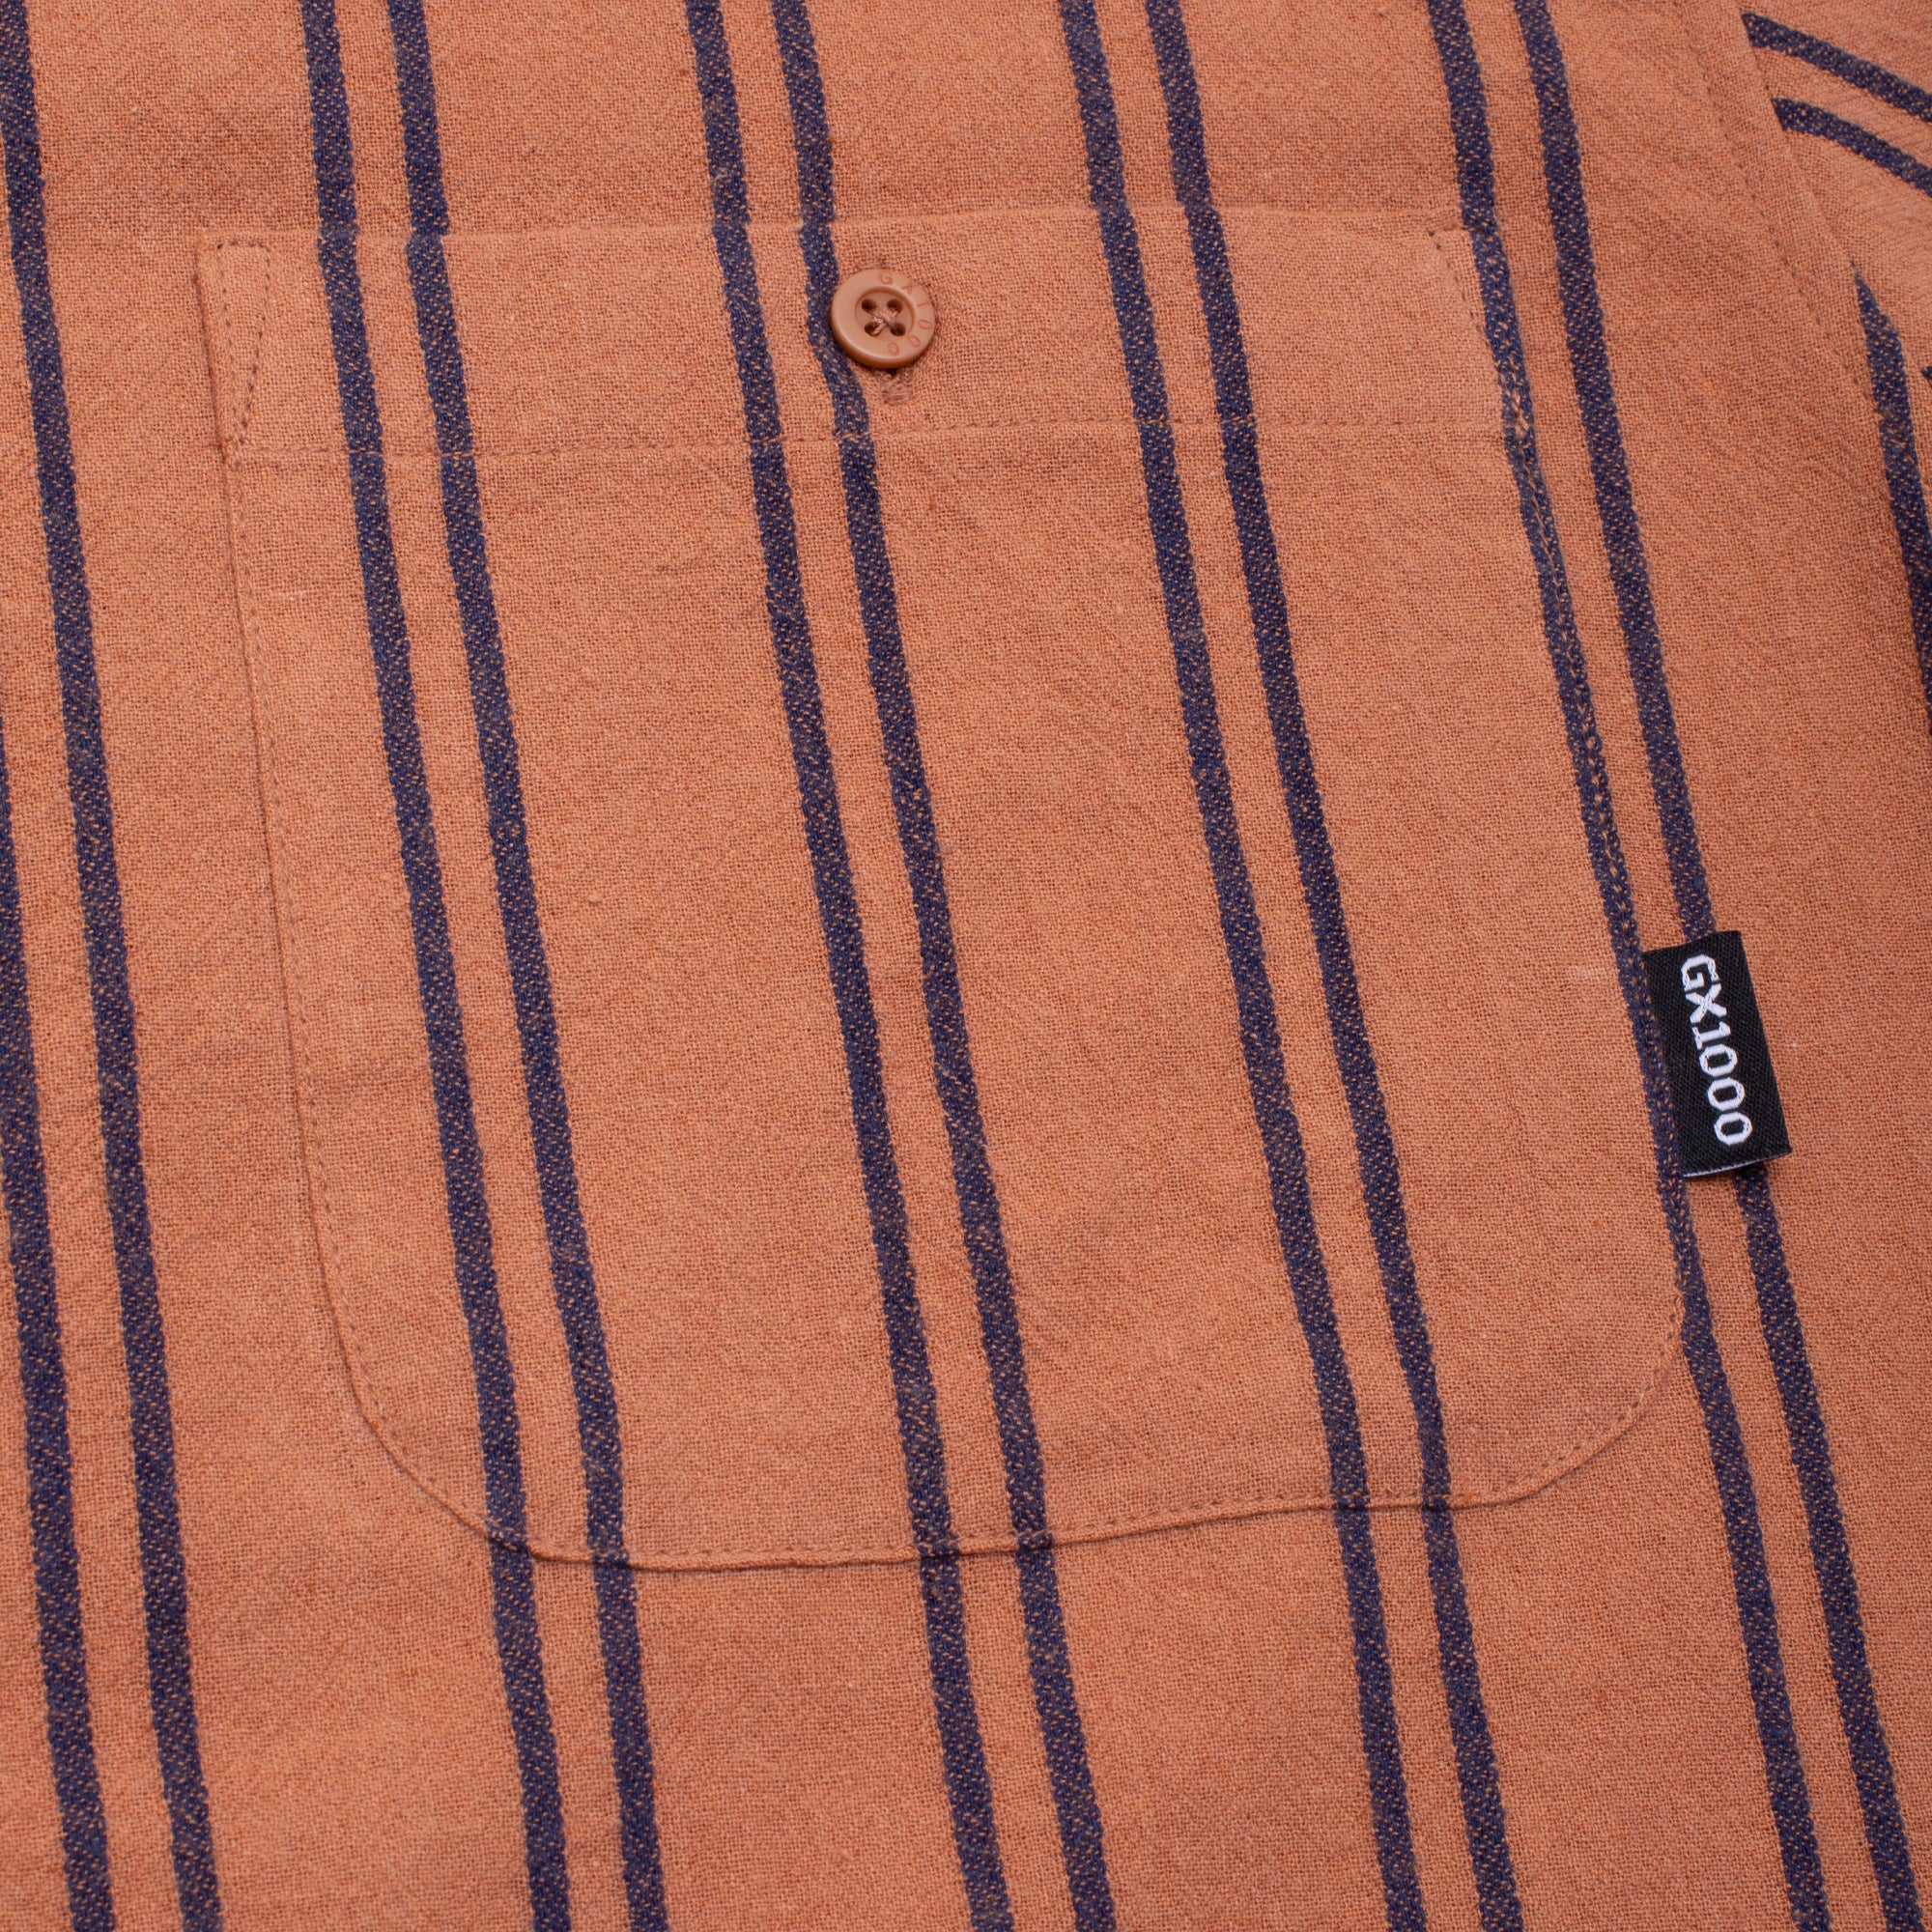 GX1000 - Short Sleeve Button Down Shirt "Brown"